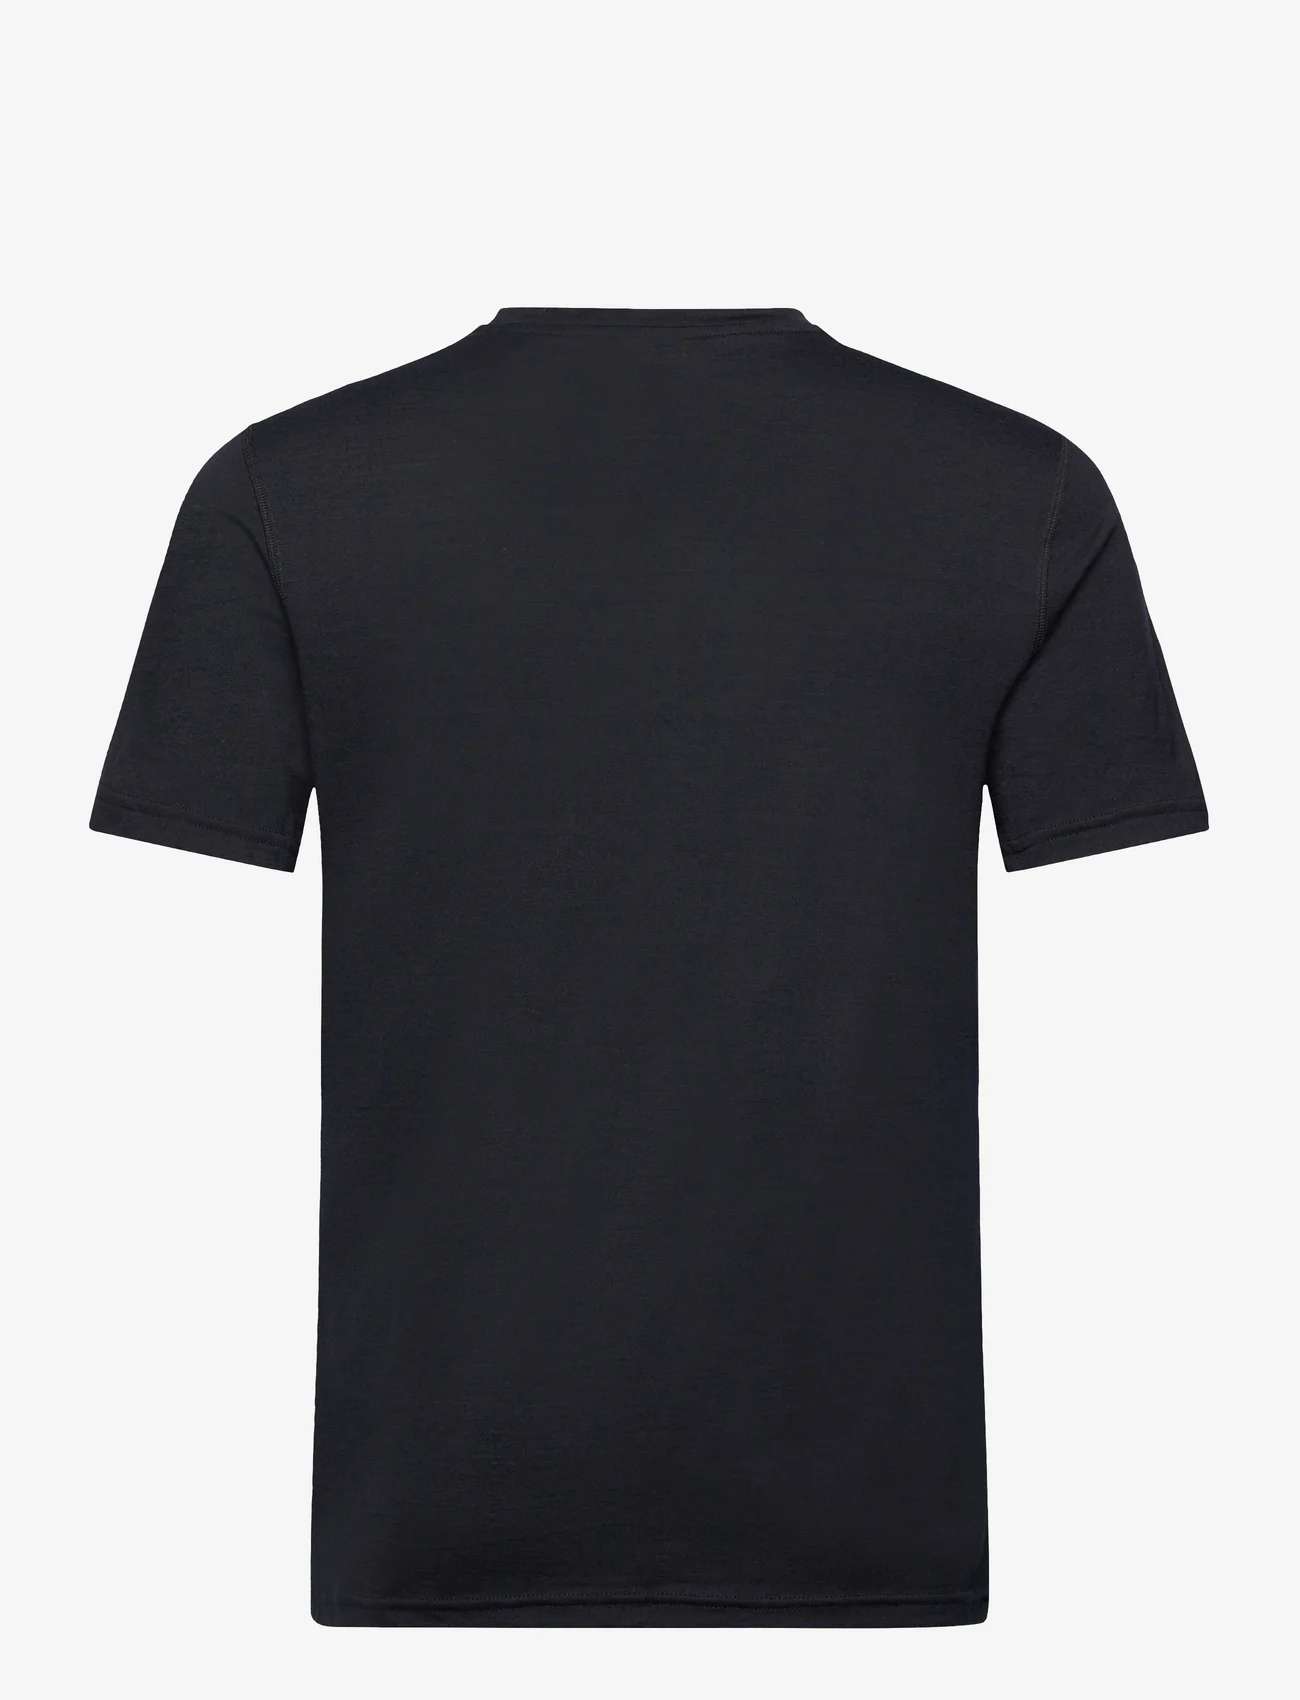 Odlo - ODLO BL TOP crew neck s/s MERINO 160 - marškinėliai trumpomis rankovėmis - black - 1